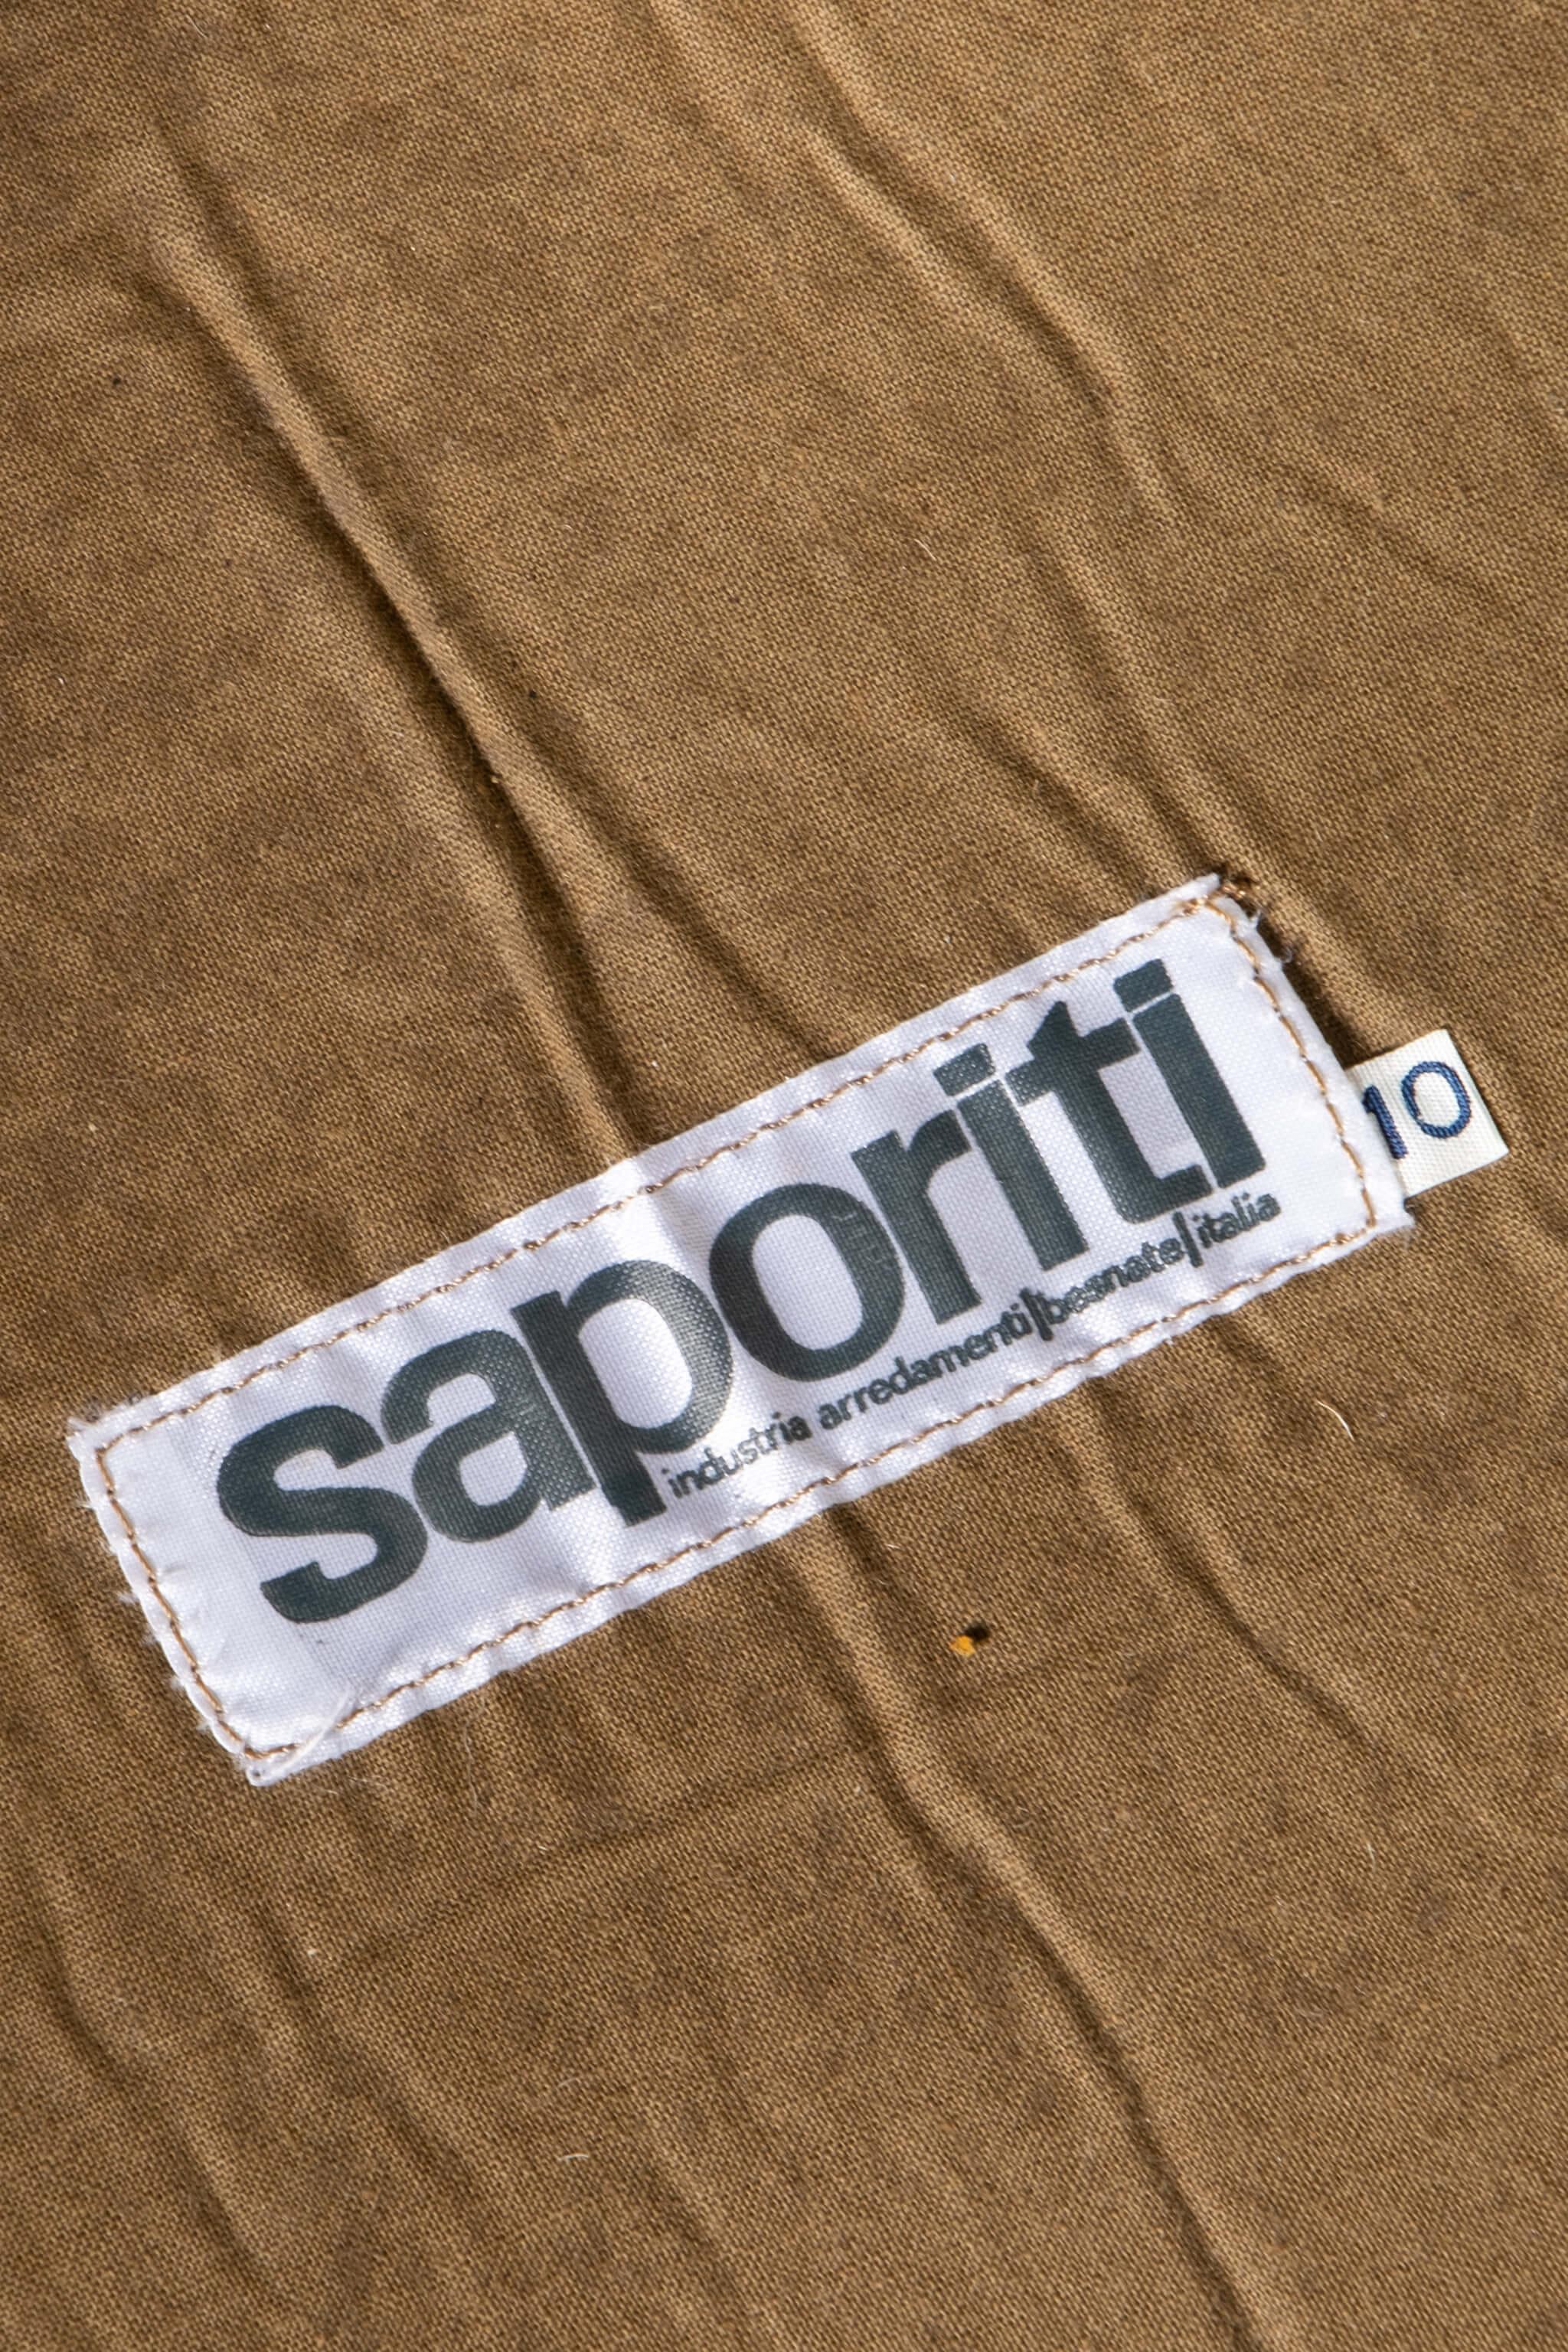 Saporiti Confidential Corner Sofa in Original Velvet Fabric by Alberto Rosselli For Sale 4